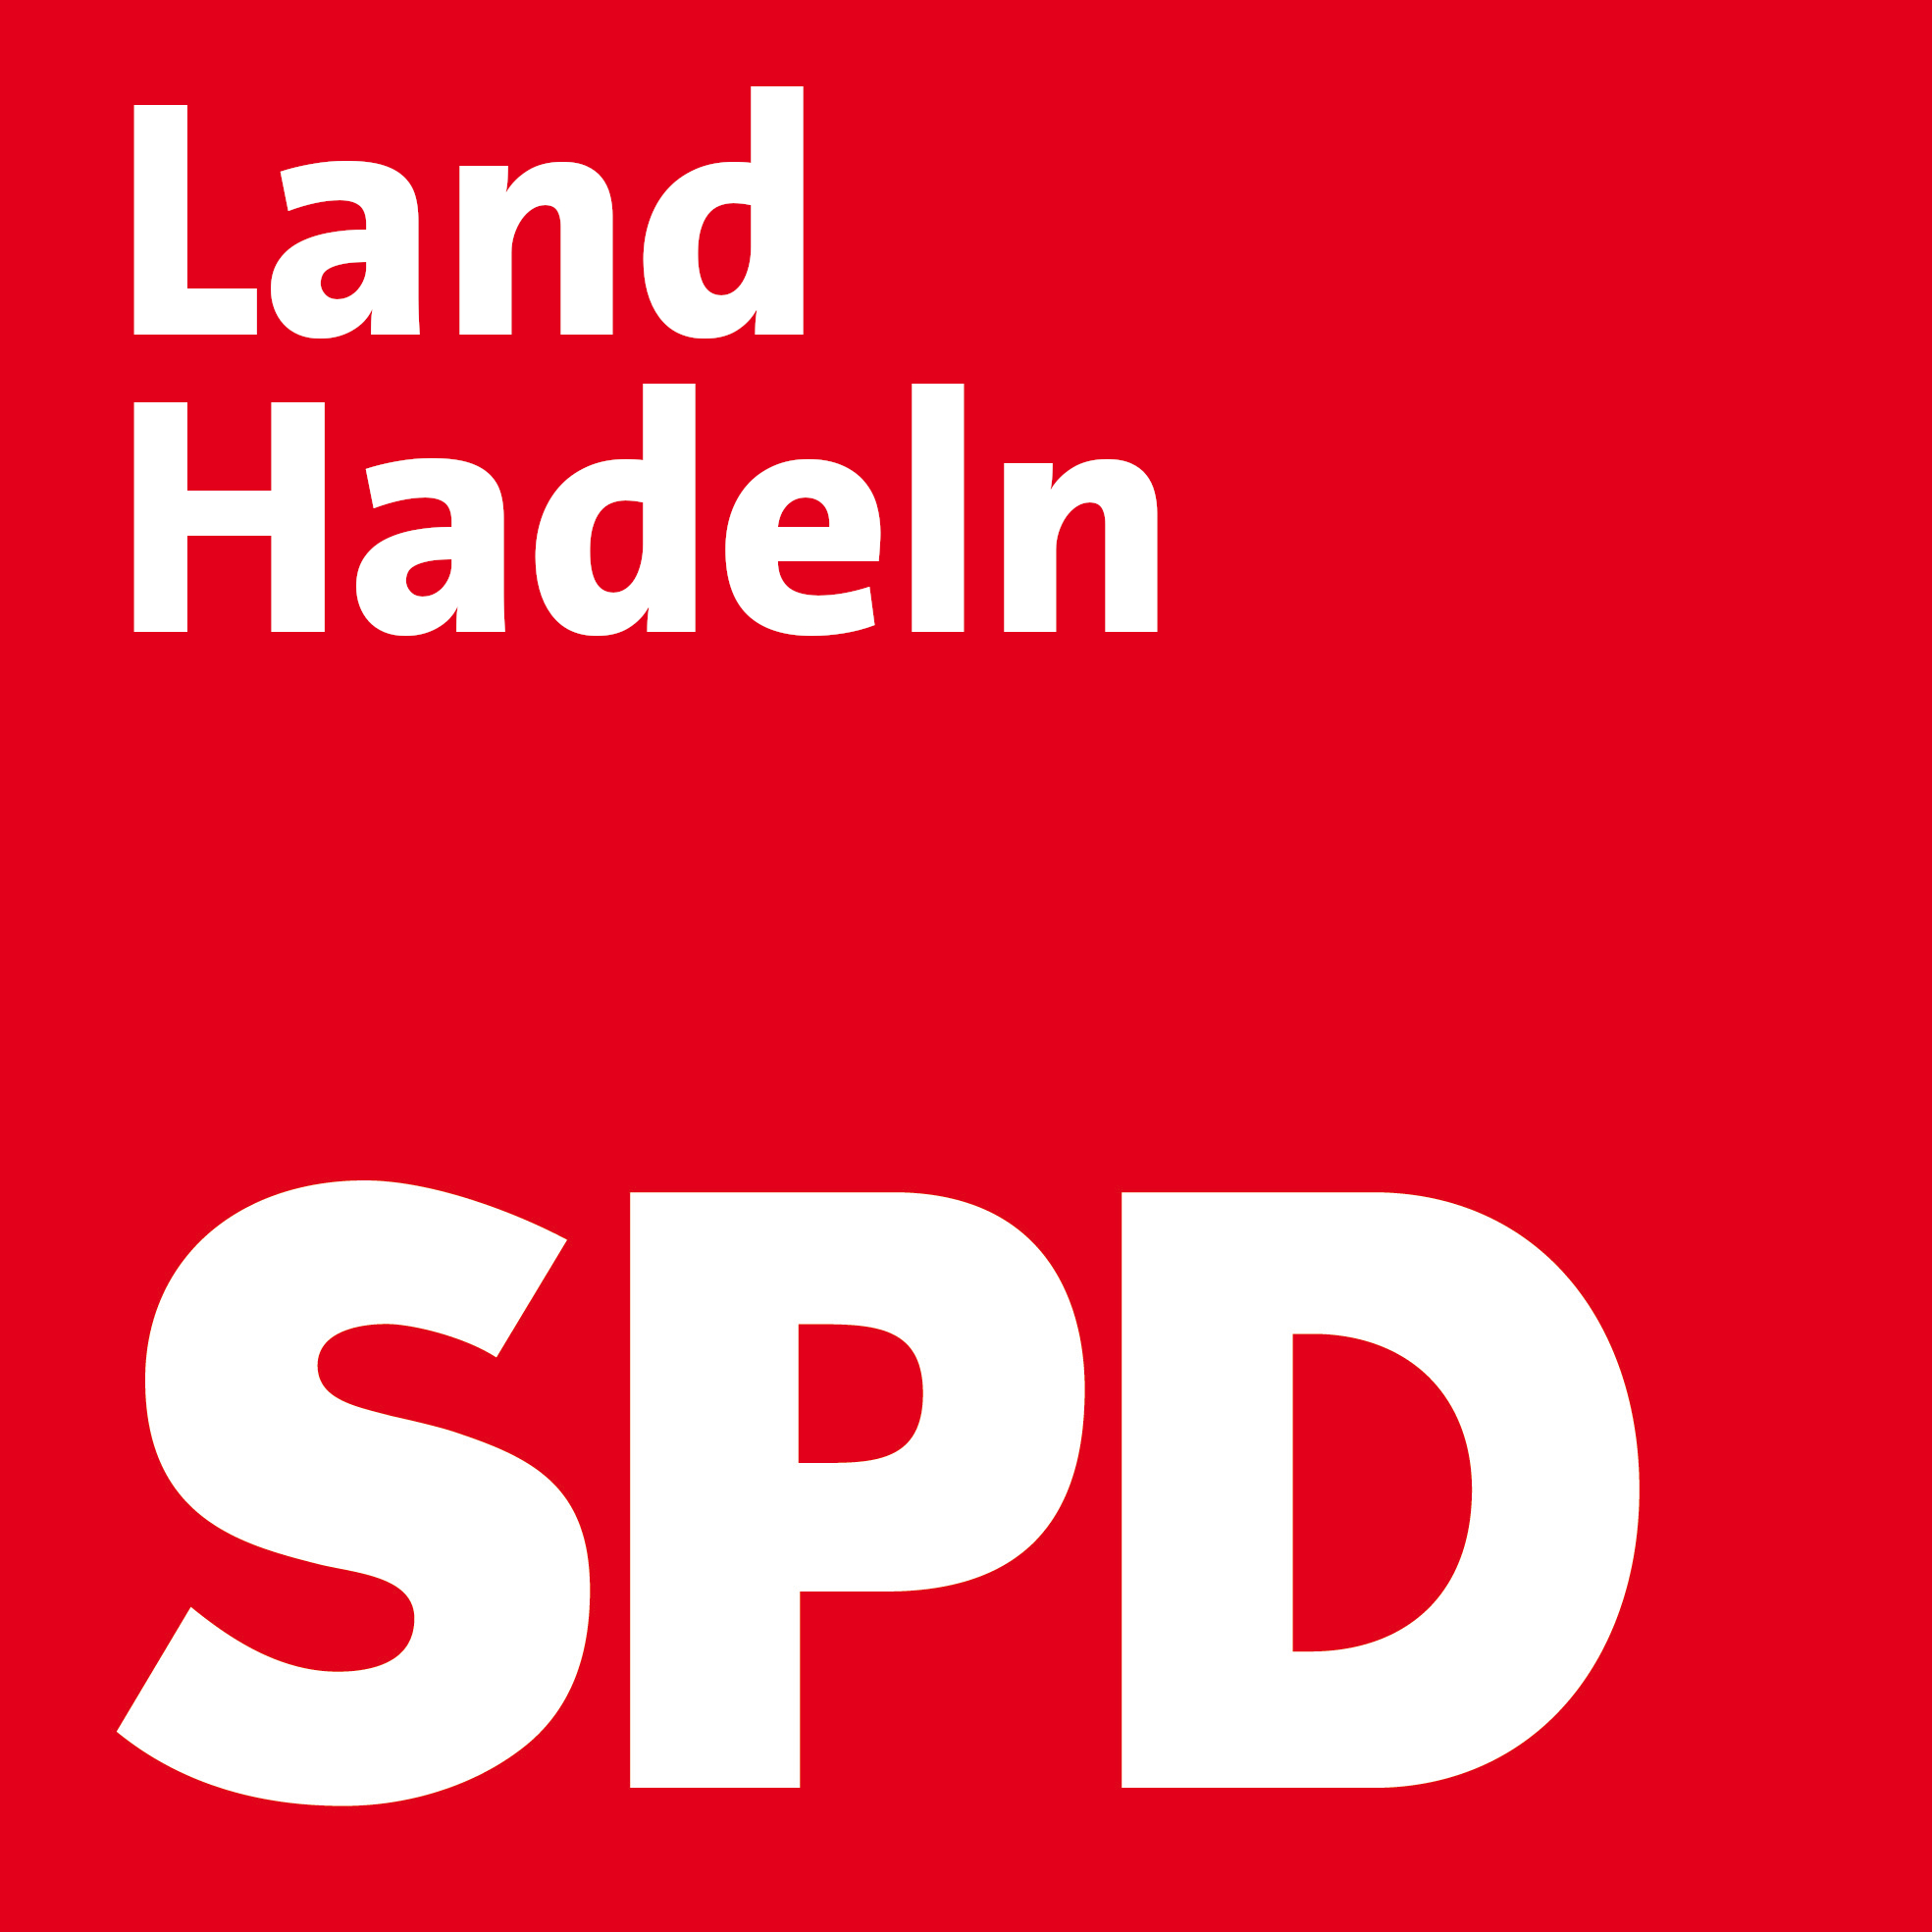 (c) Spd-land-hadeln.de